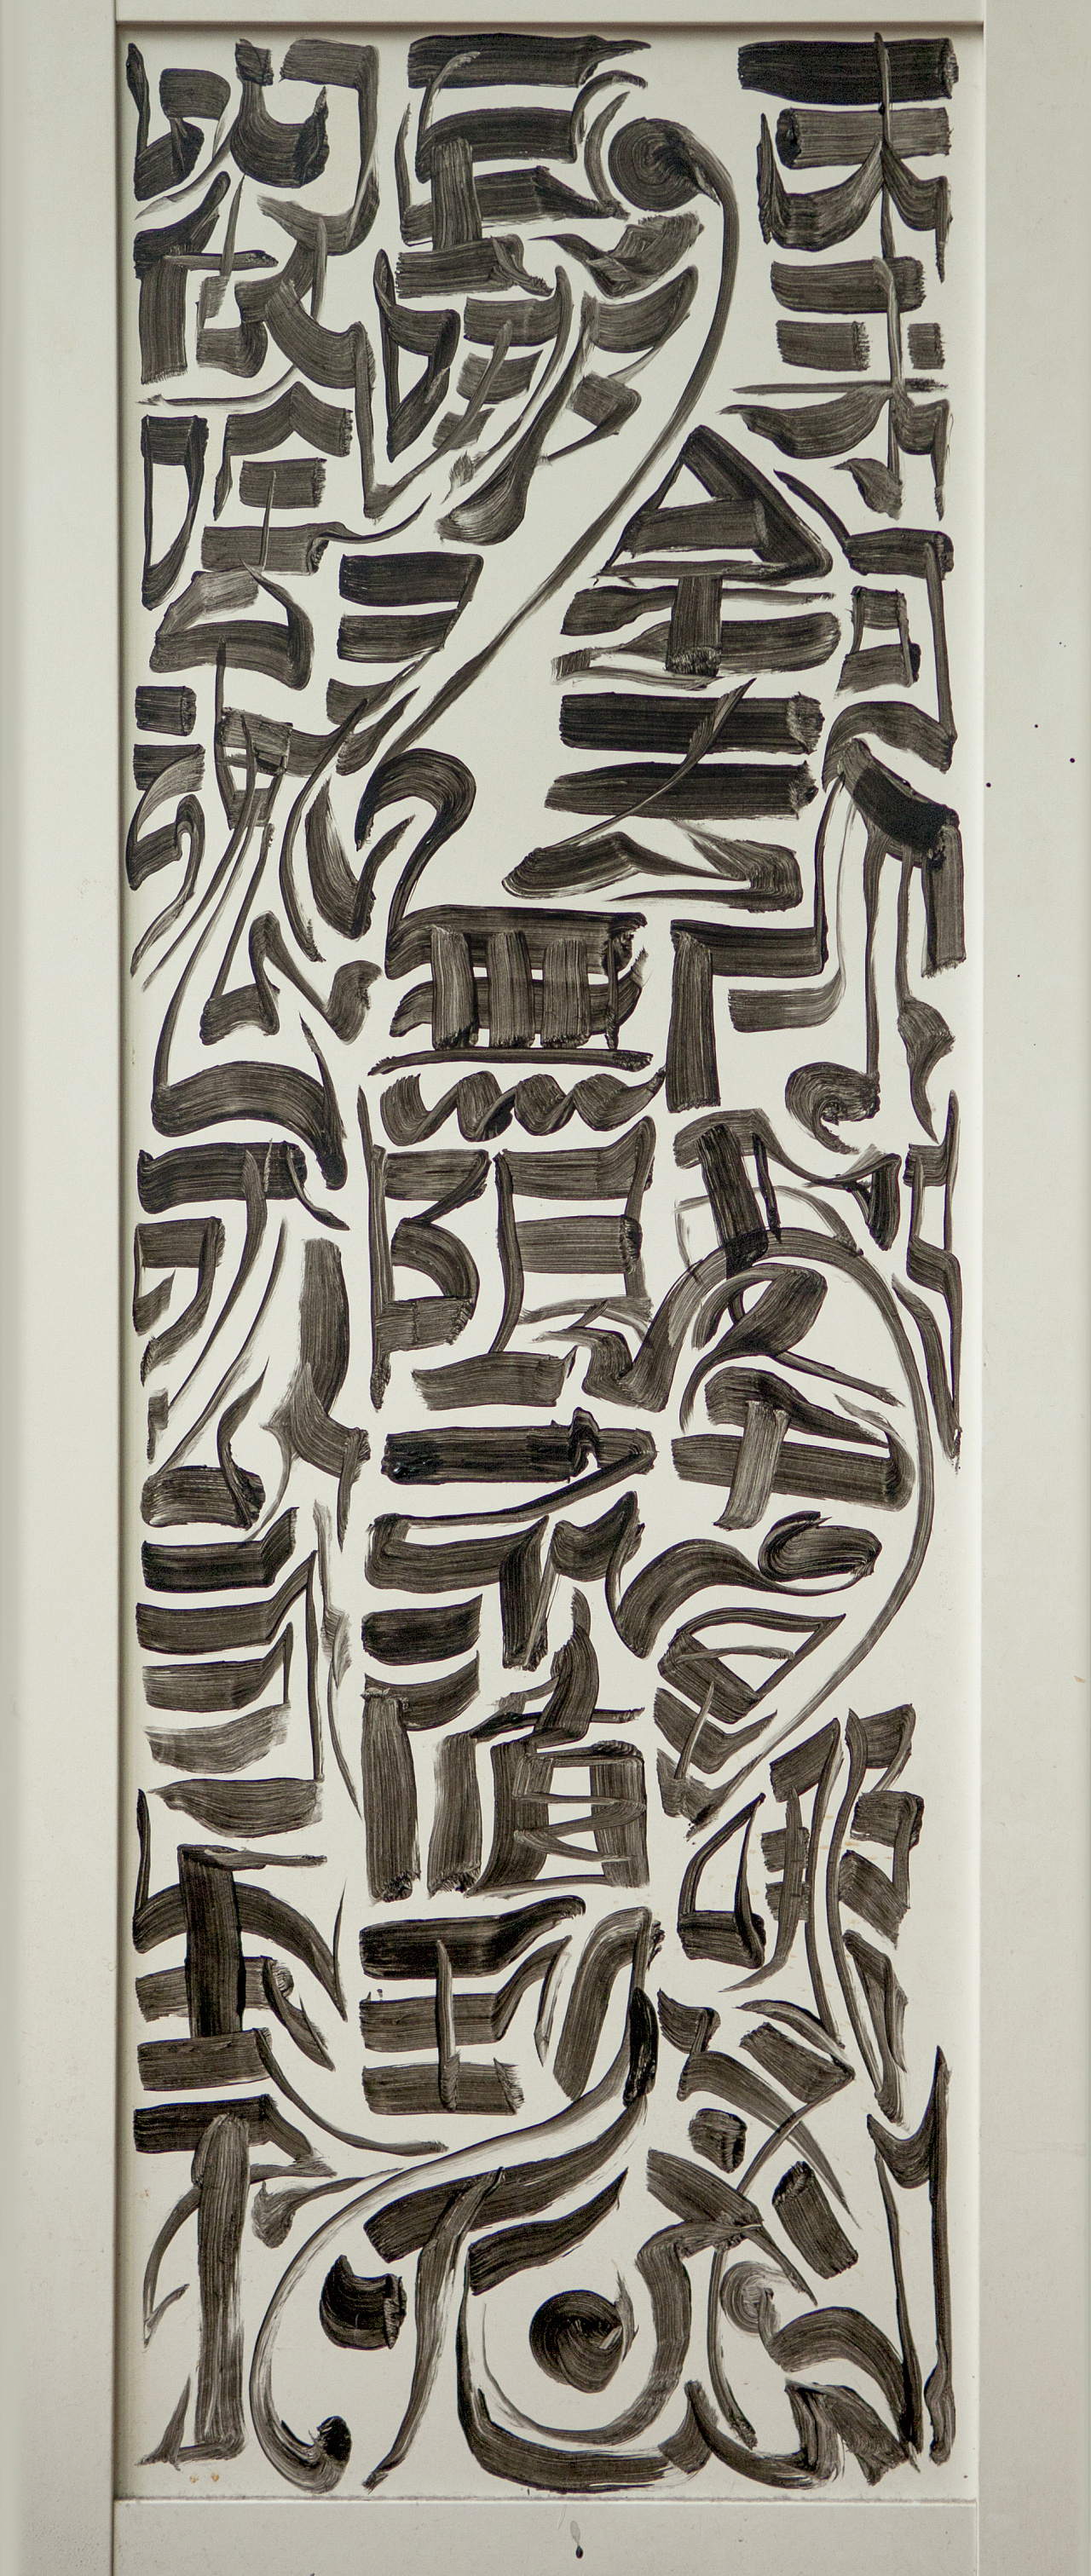 Chinese Creative Font Design-Zhu jingyi's early brush calligraphy